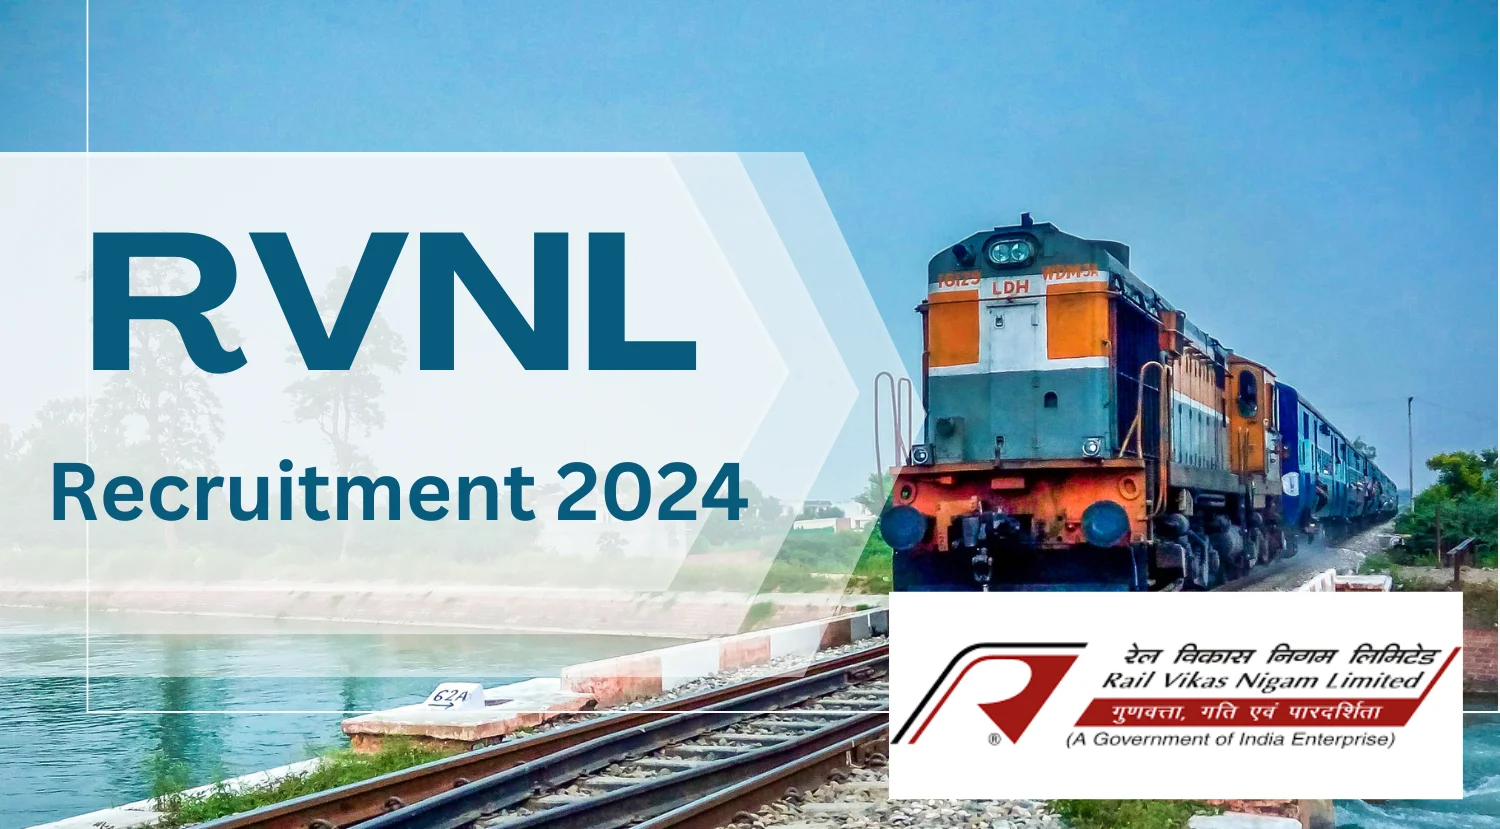 RVNL Recruitment 2024